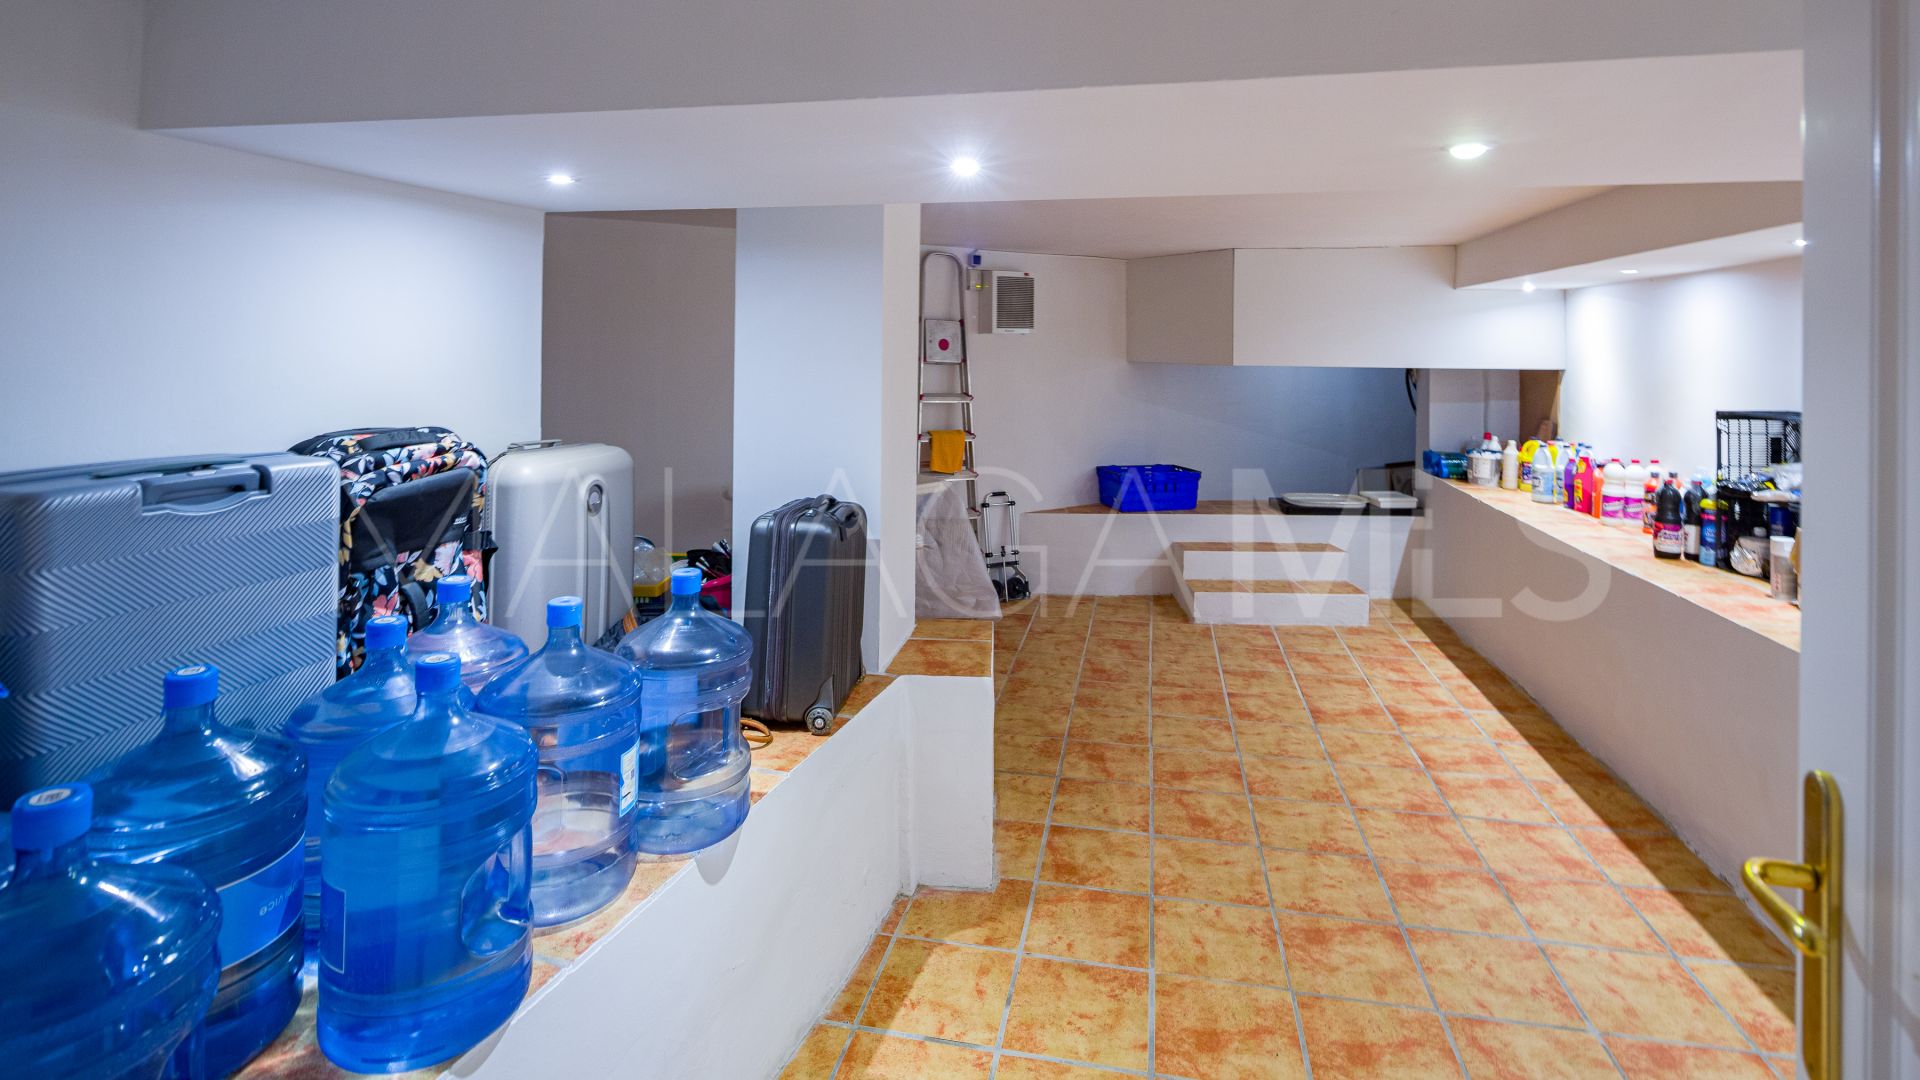 Ground floor duplex for sale in Marbella - Puerto Banus